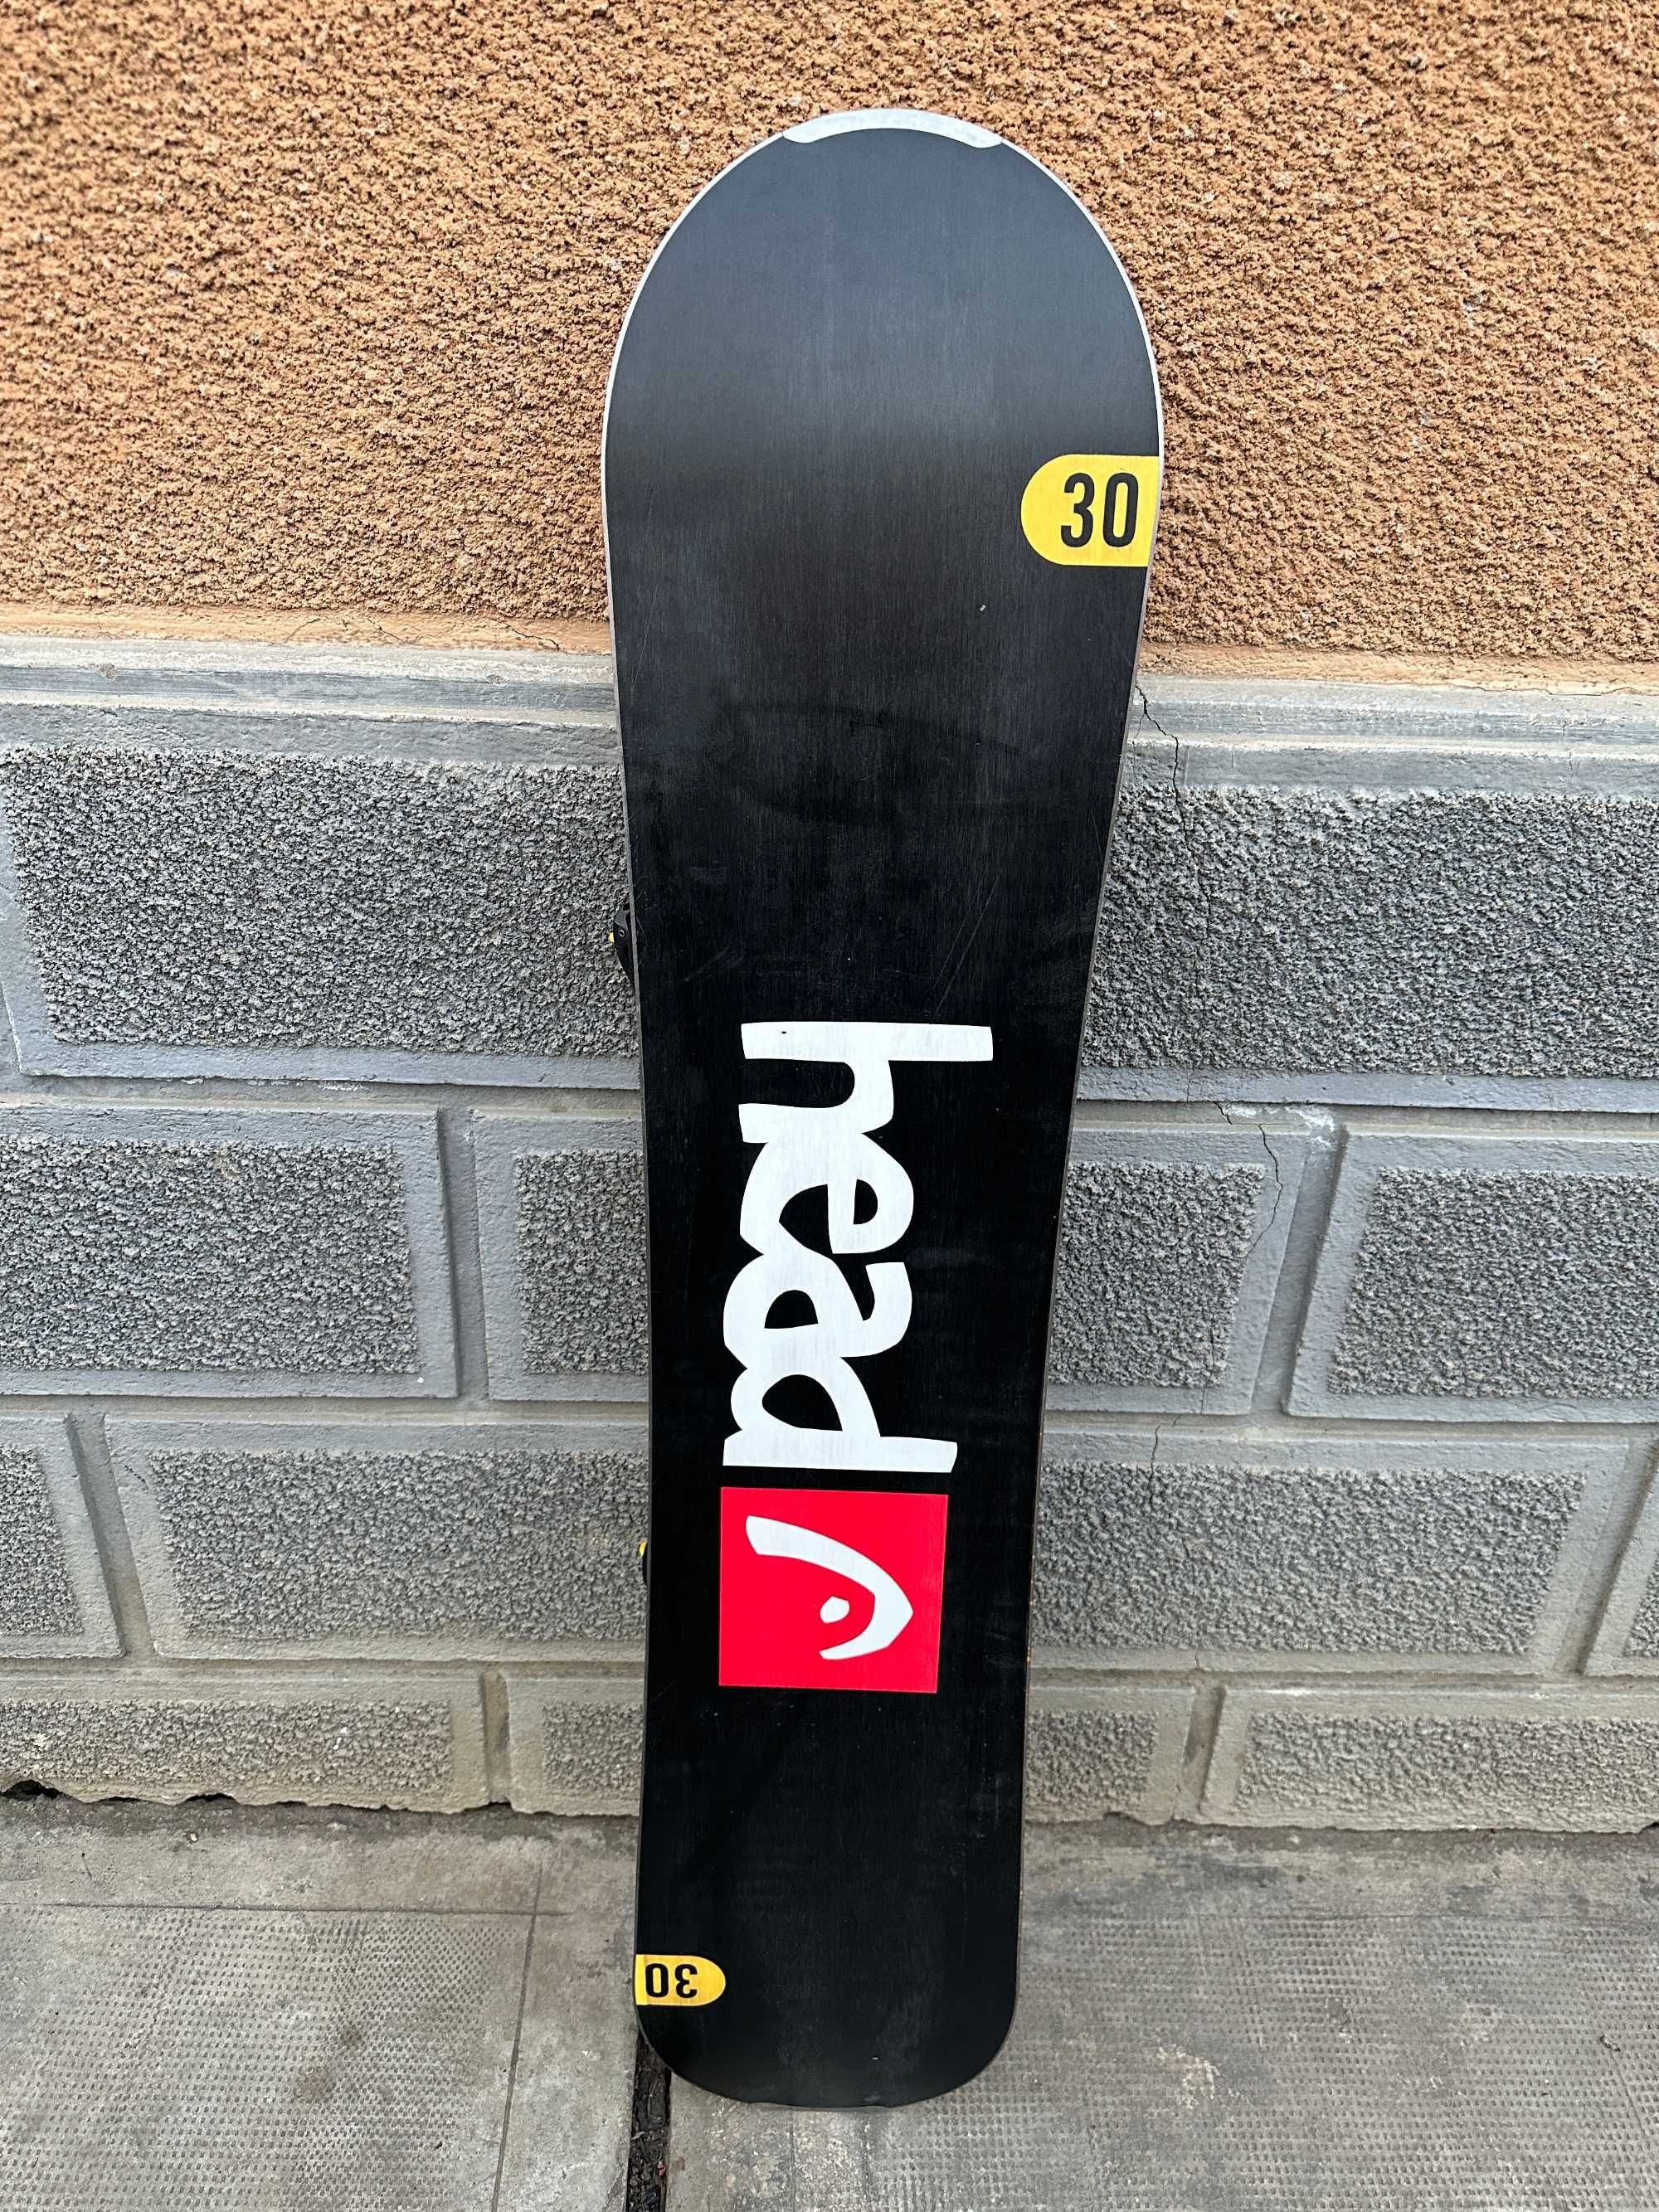 placa snowboard head 4d L130cm